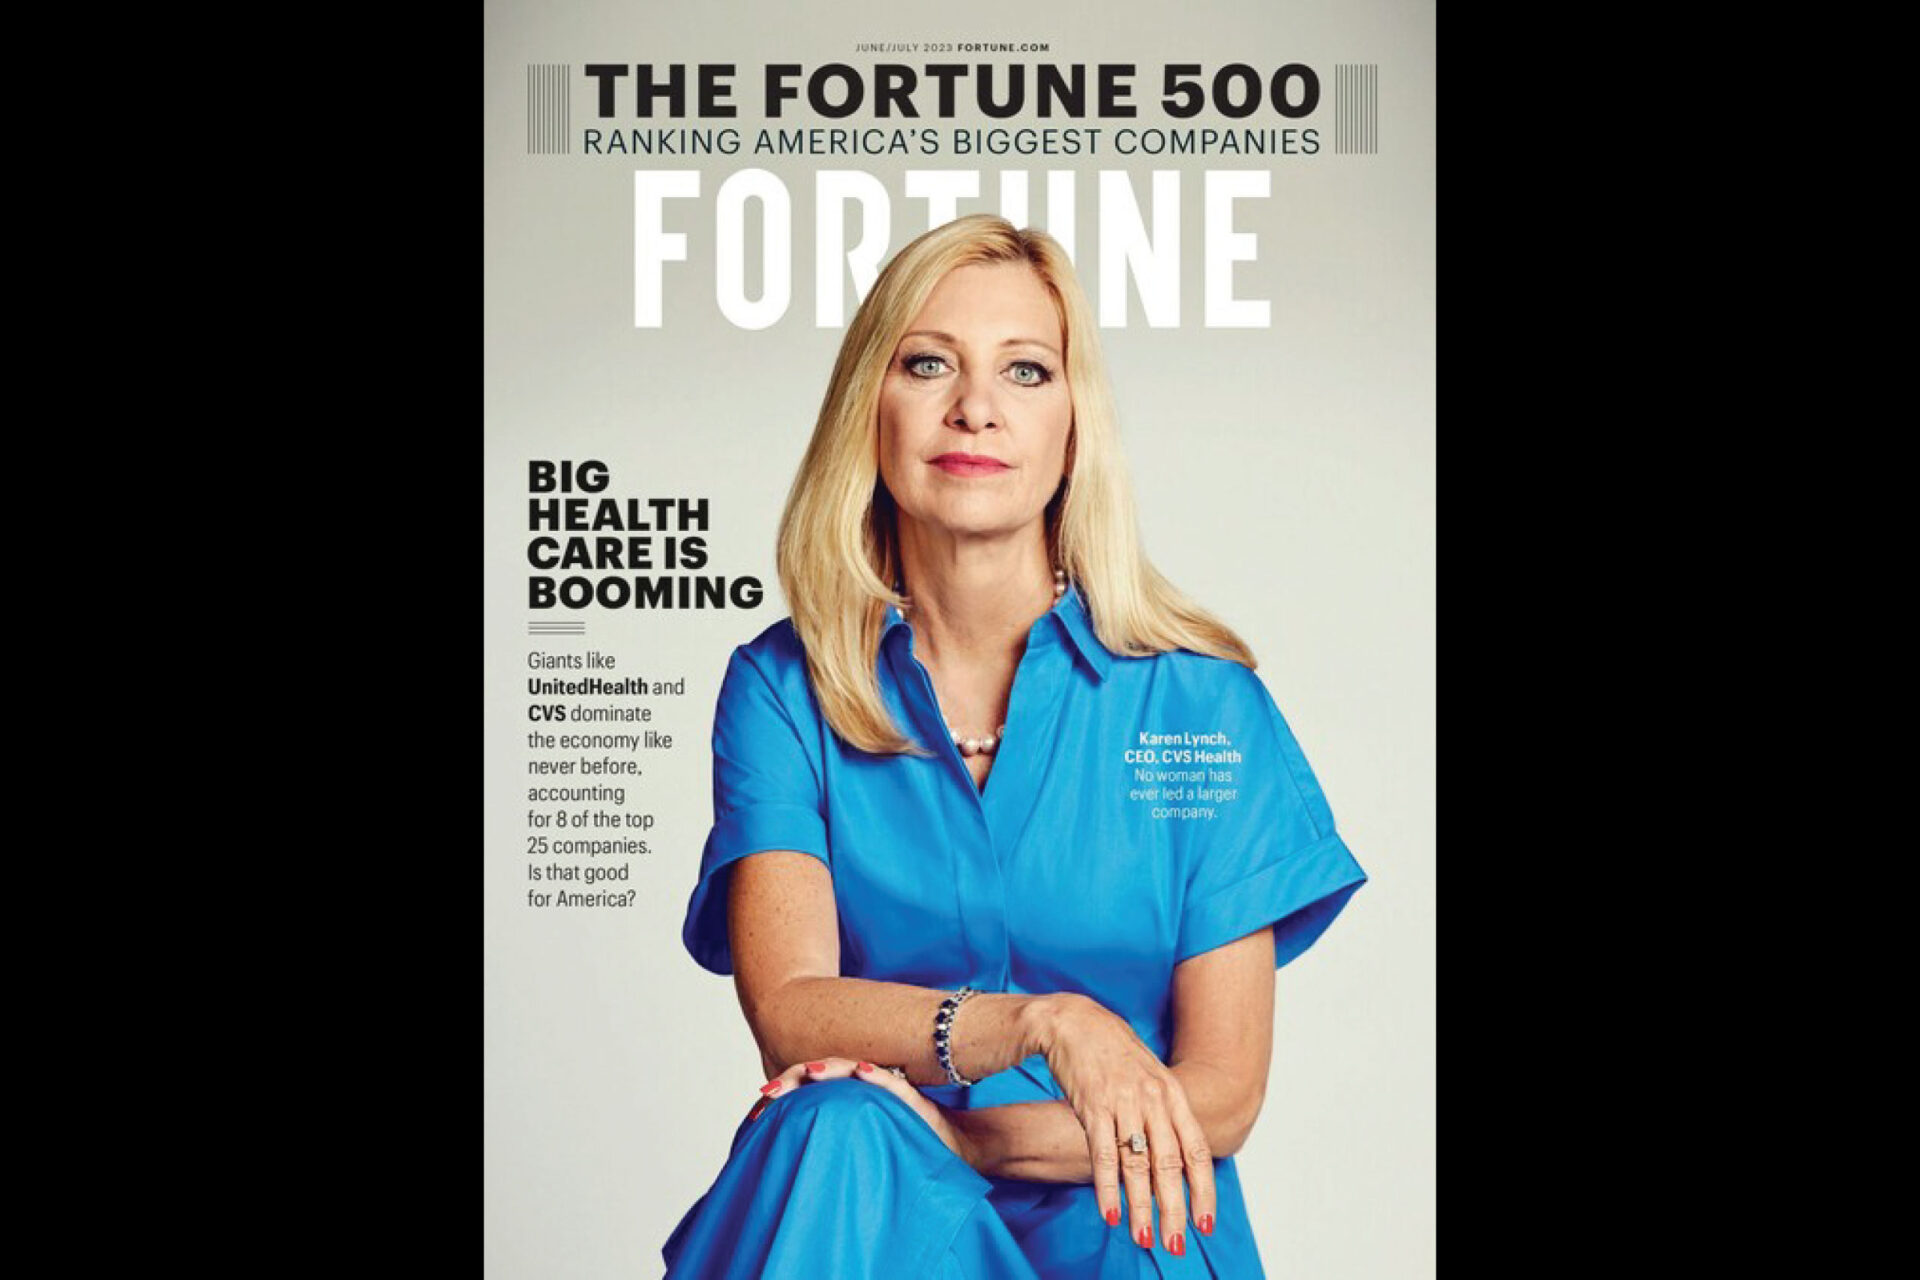 CVS Health CEO featured in Fortune magazine